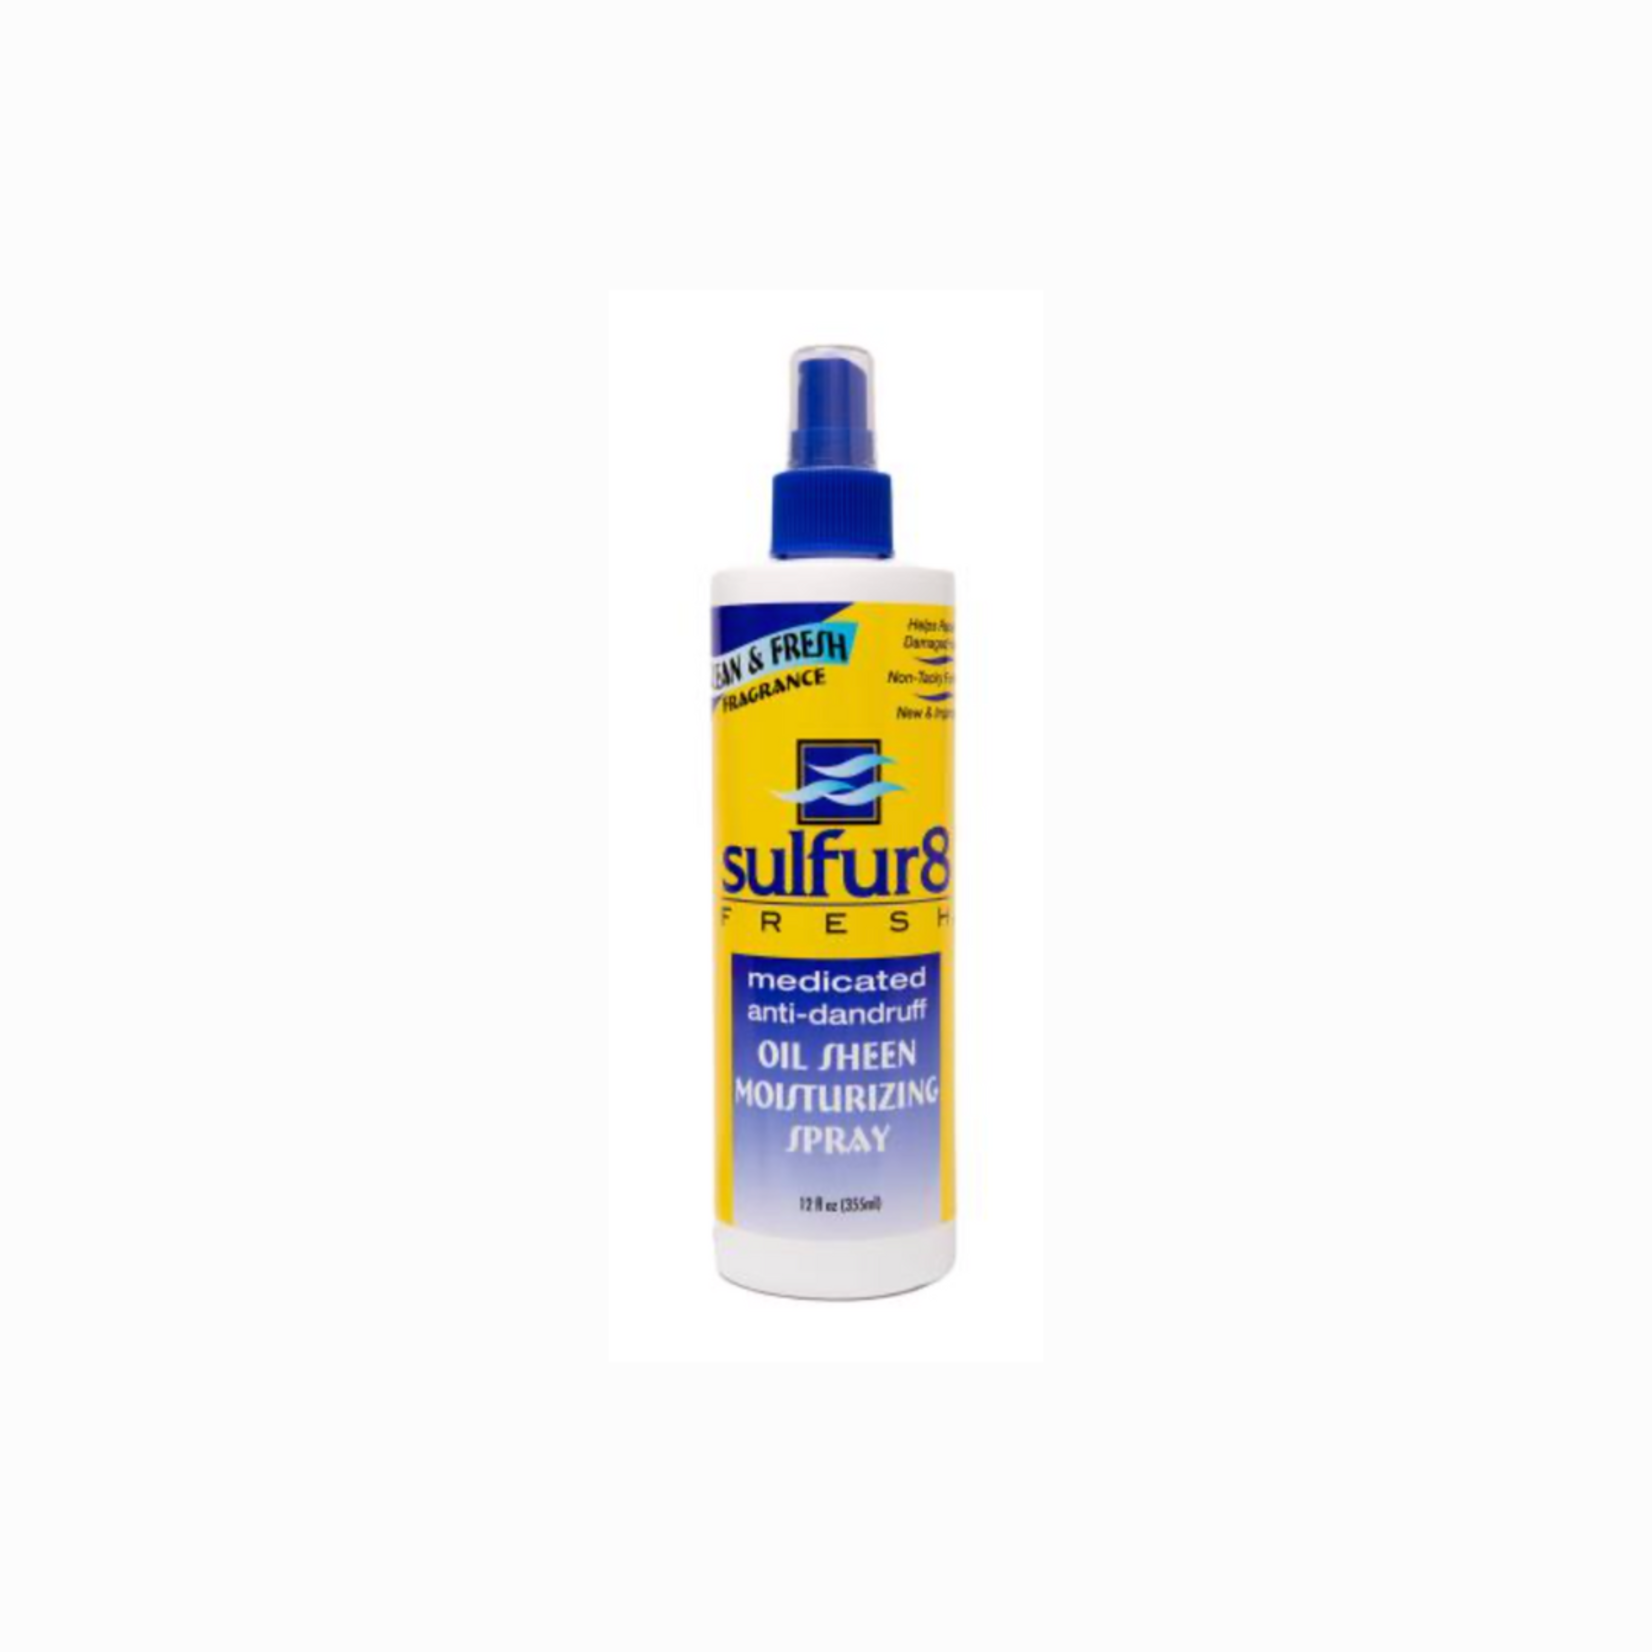 sulfur8 Sulfur8 Fresh Medicated anti-dandruff Oil Sheen Moisturizing Spray